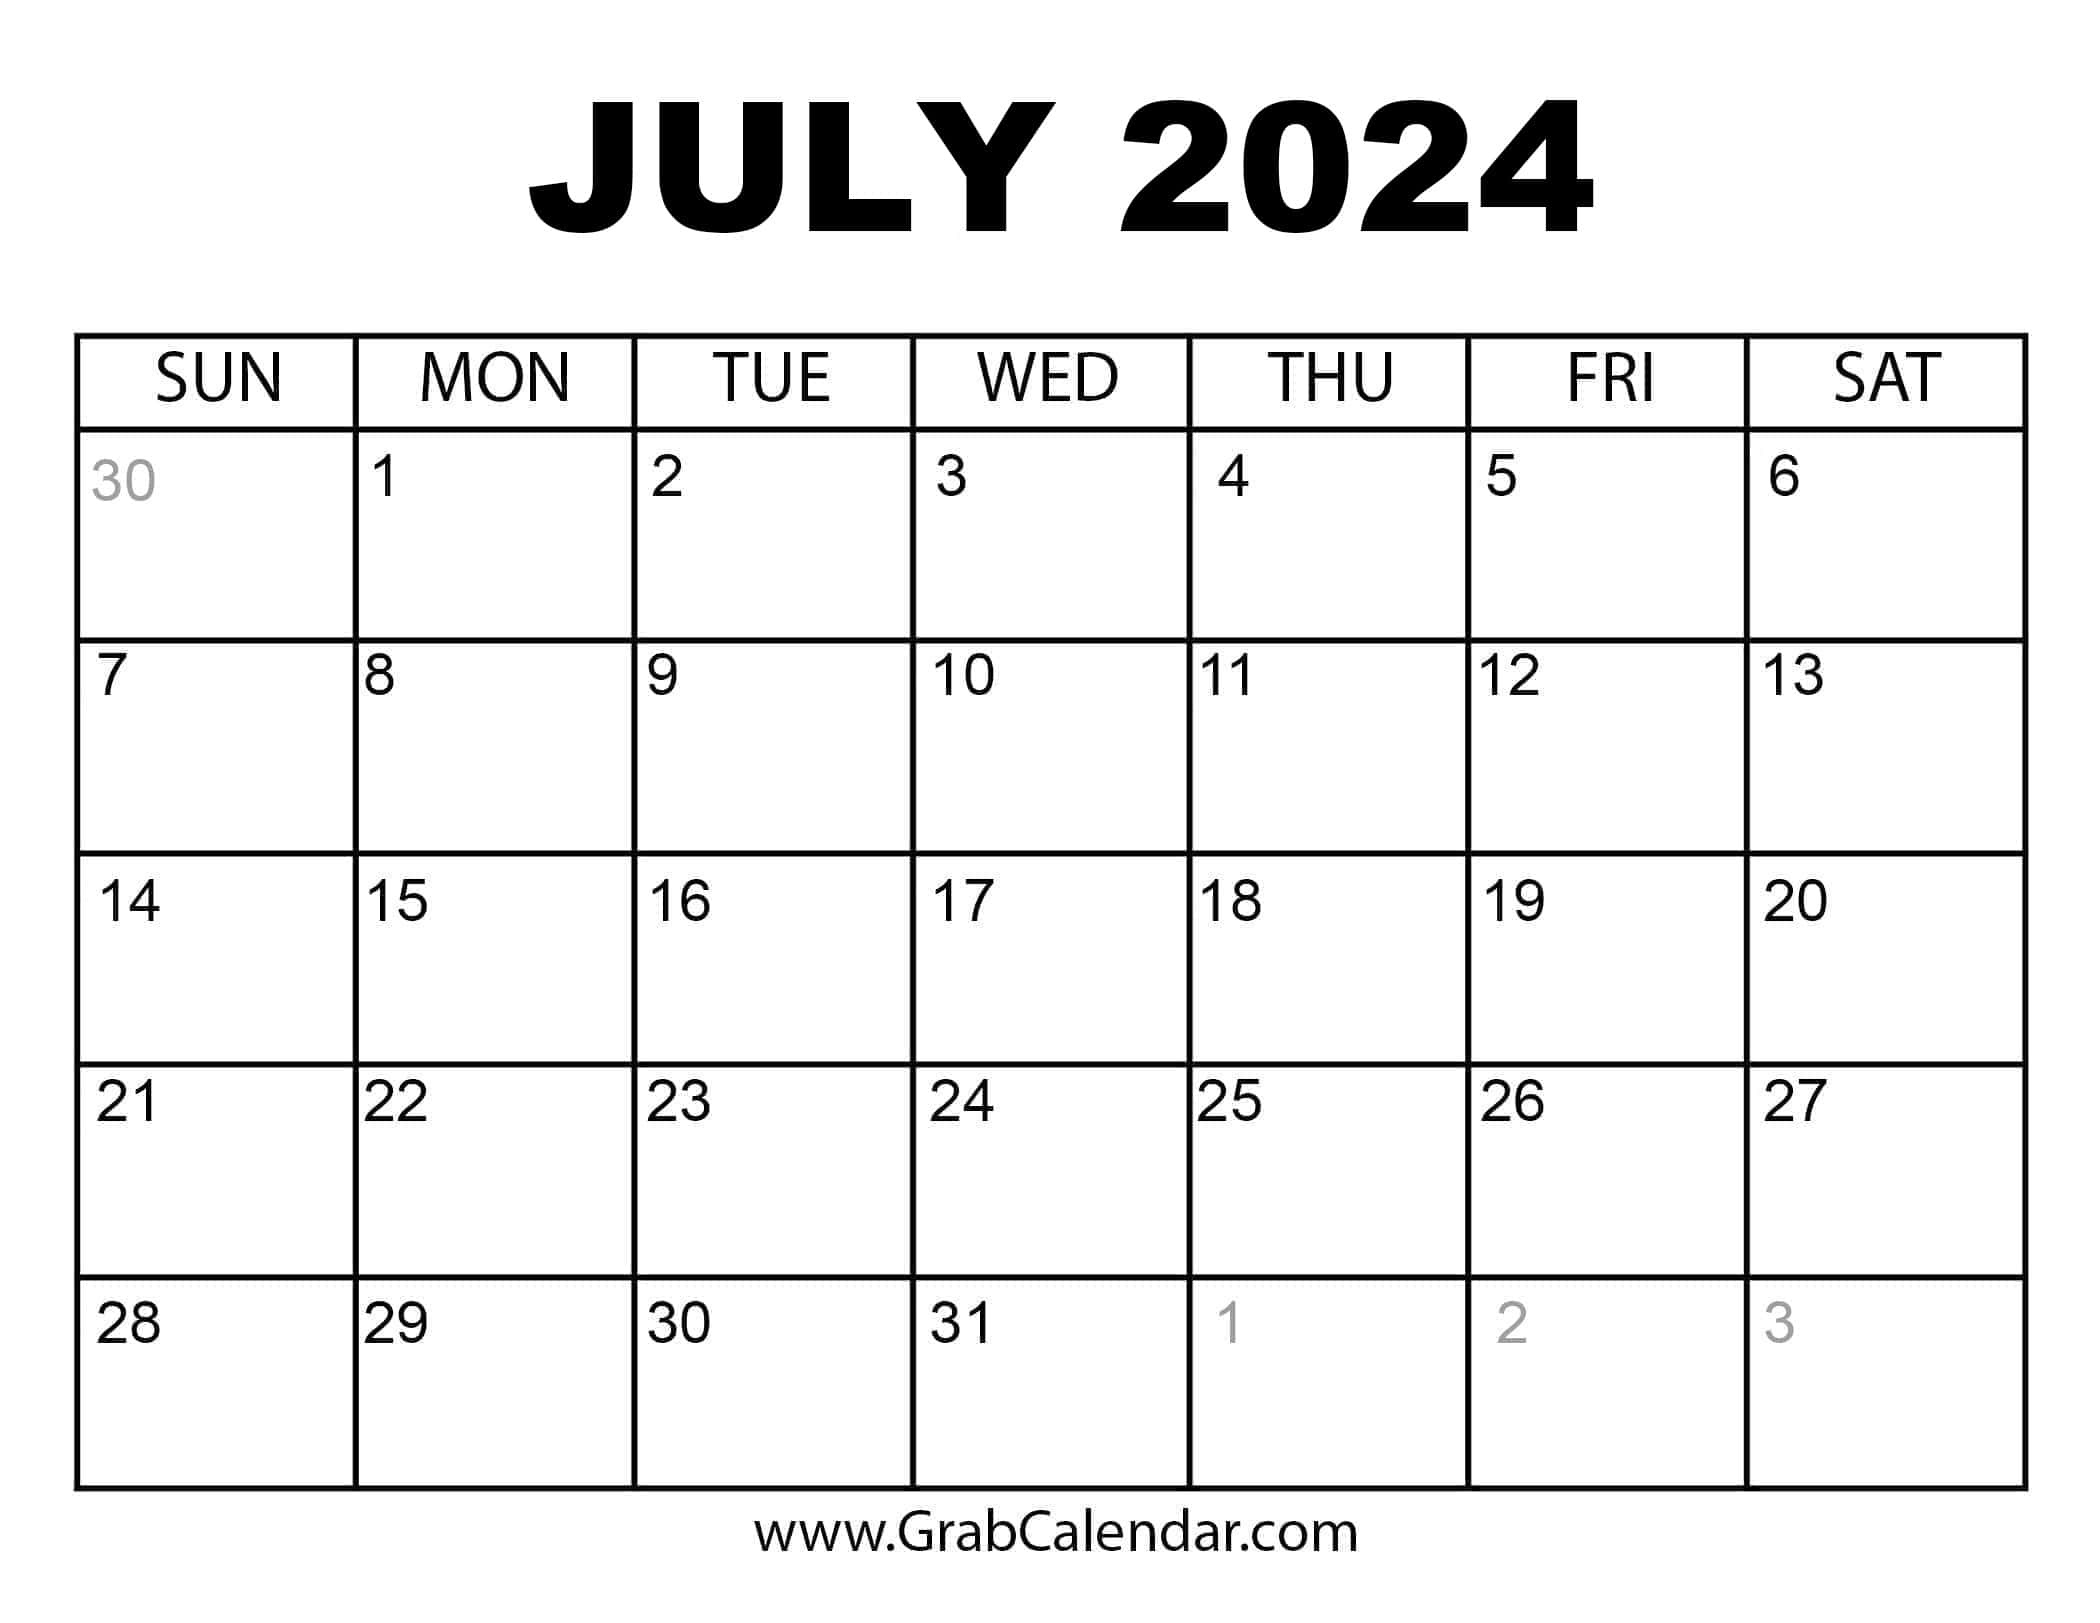 Printable July 2024 Calendar intended for Free July 2024 Printable Calendar